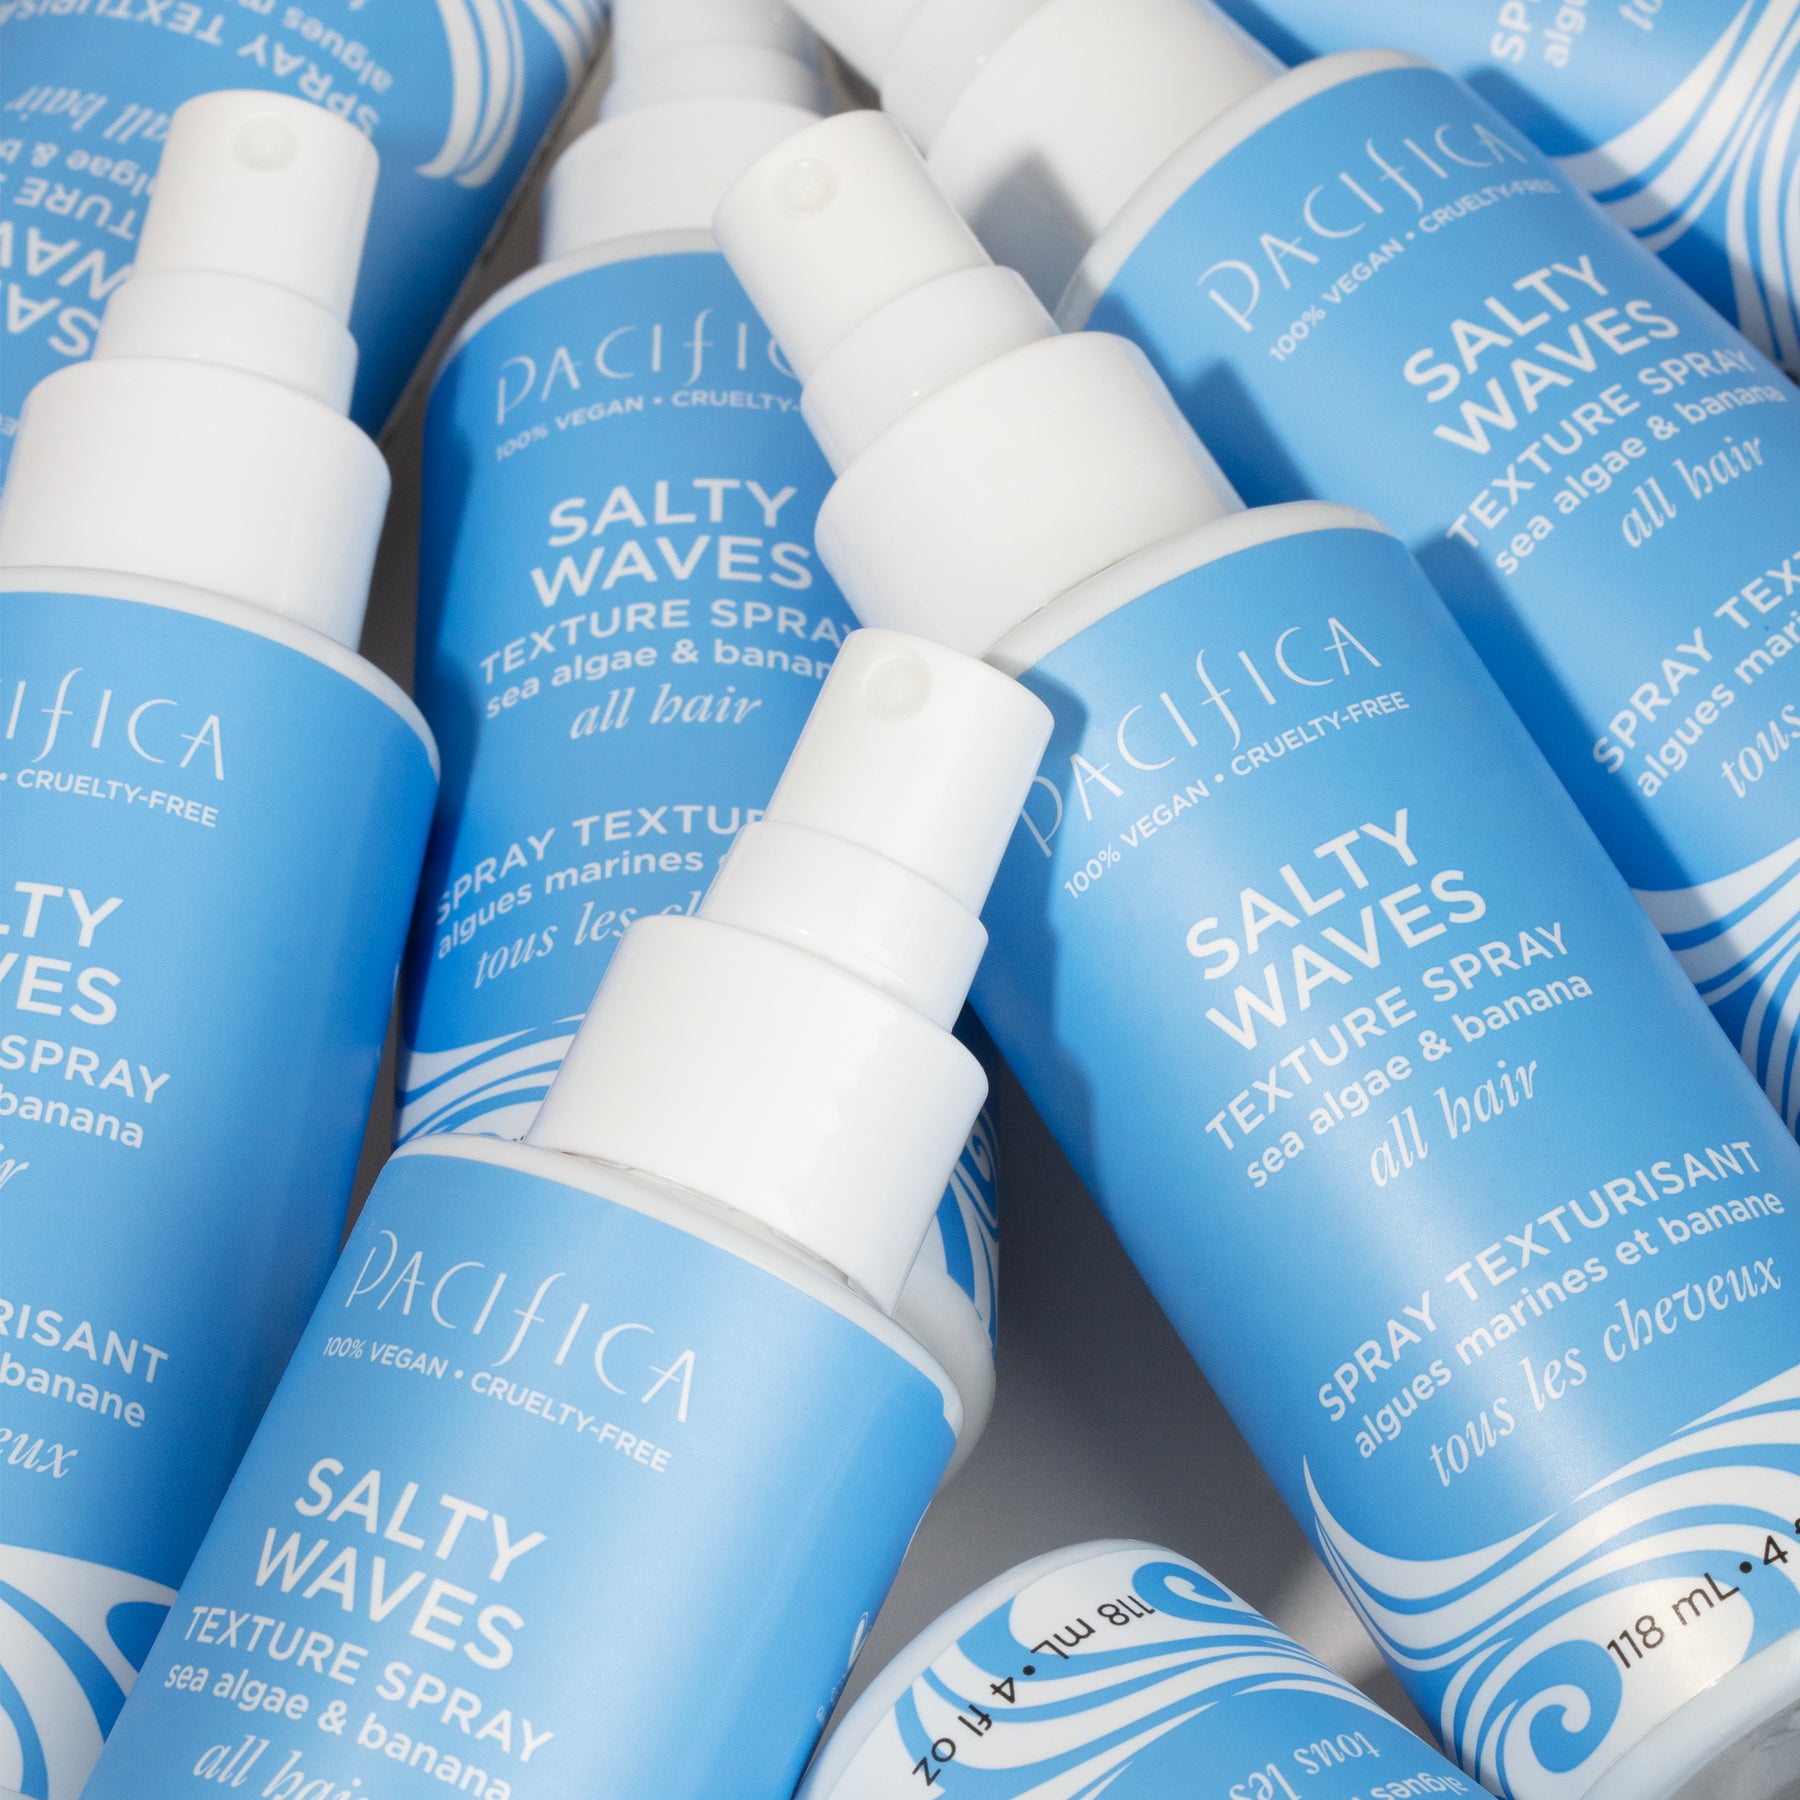 Salty Waves Texture Spray - Haircare - Pacifica Beauty